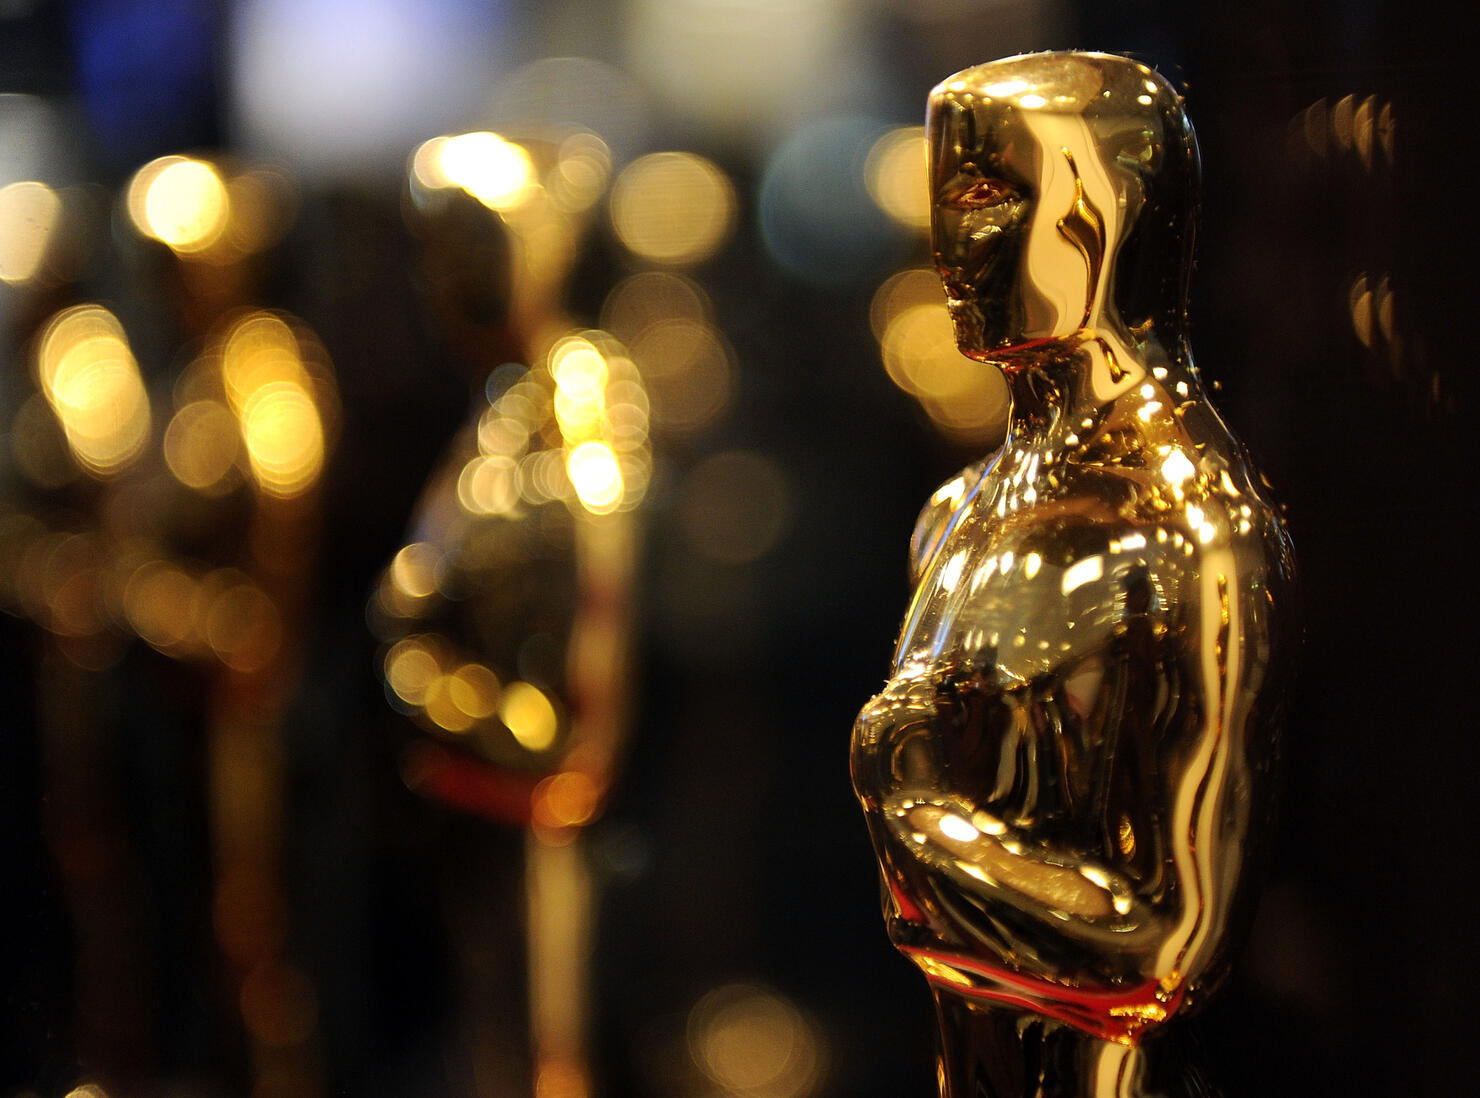 Oscar winners 2021: The full list